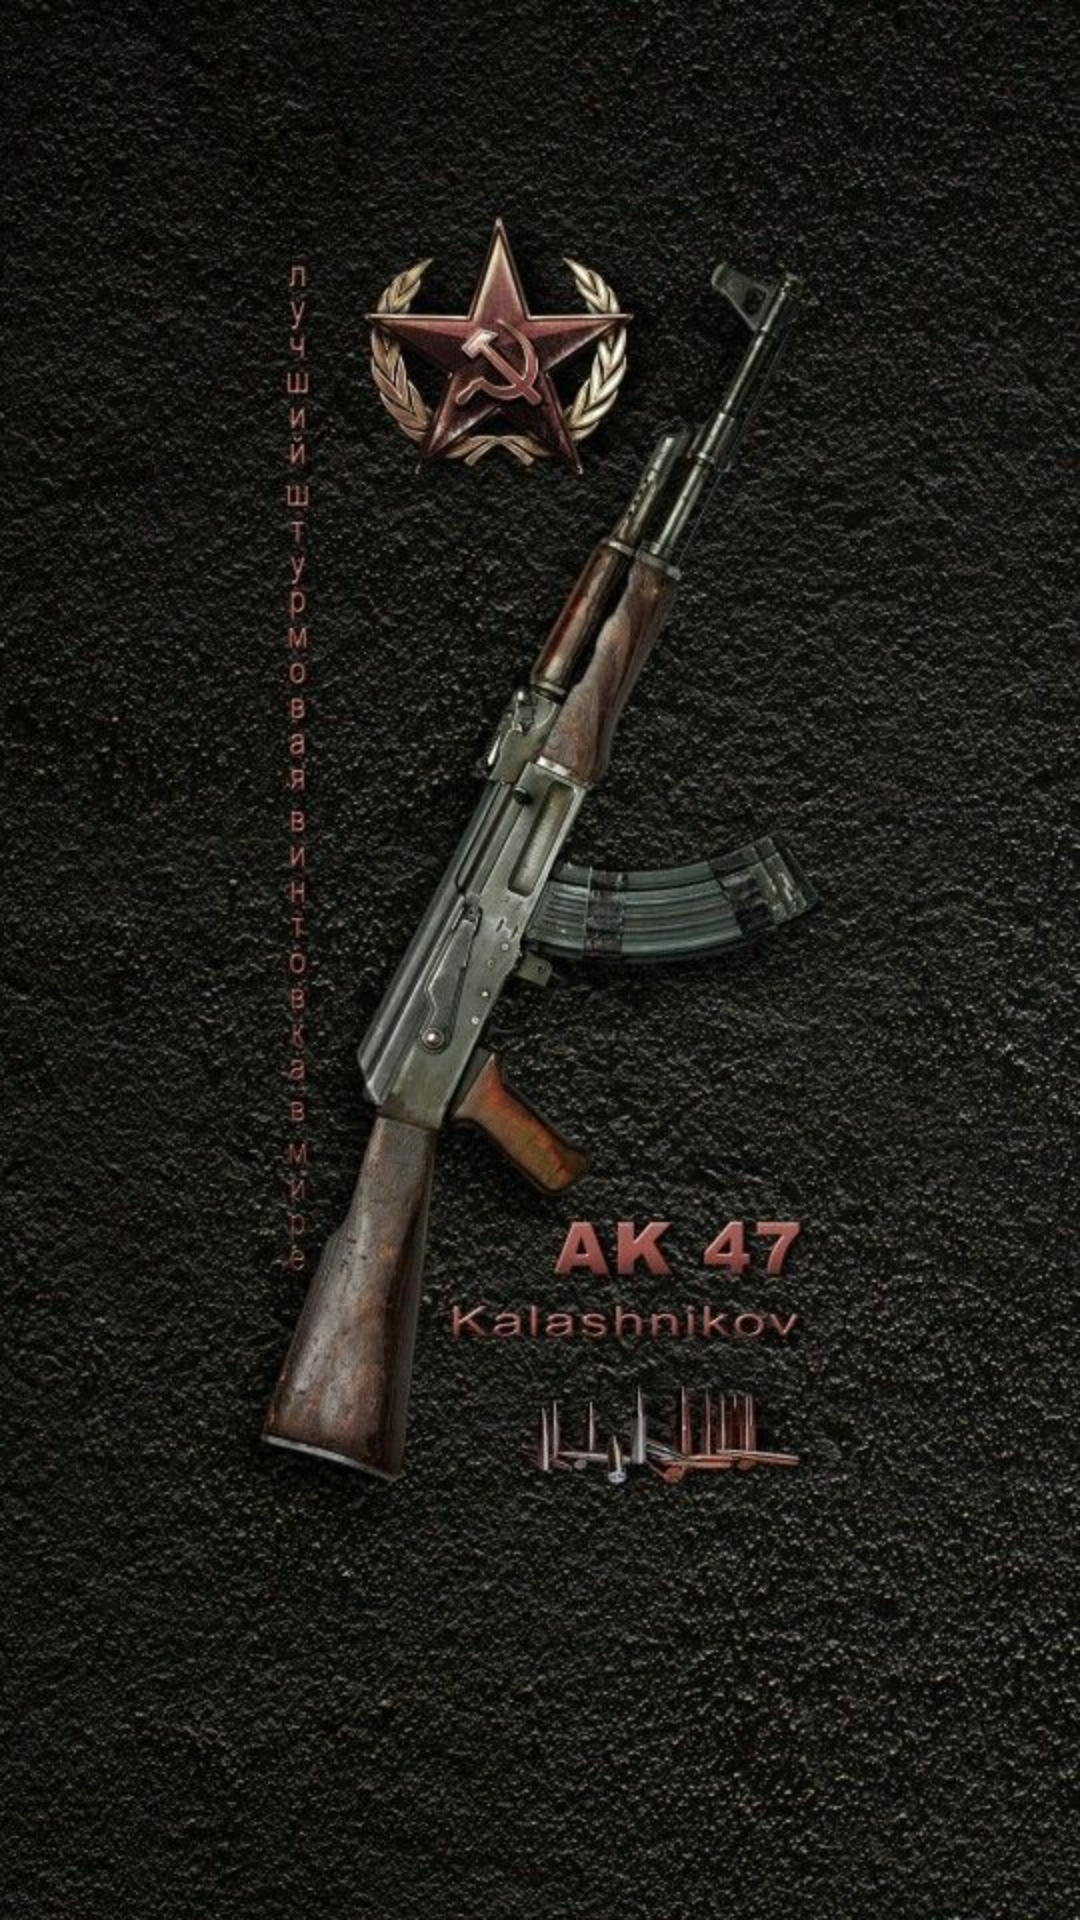 Ak 47 Wallpapers - Top 20 Best Ak 47 Wallpapers Download